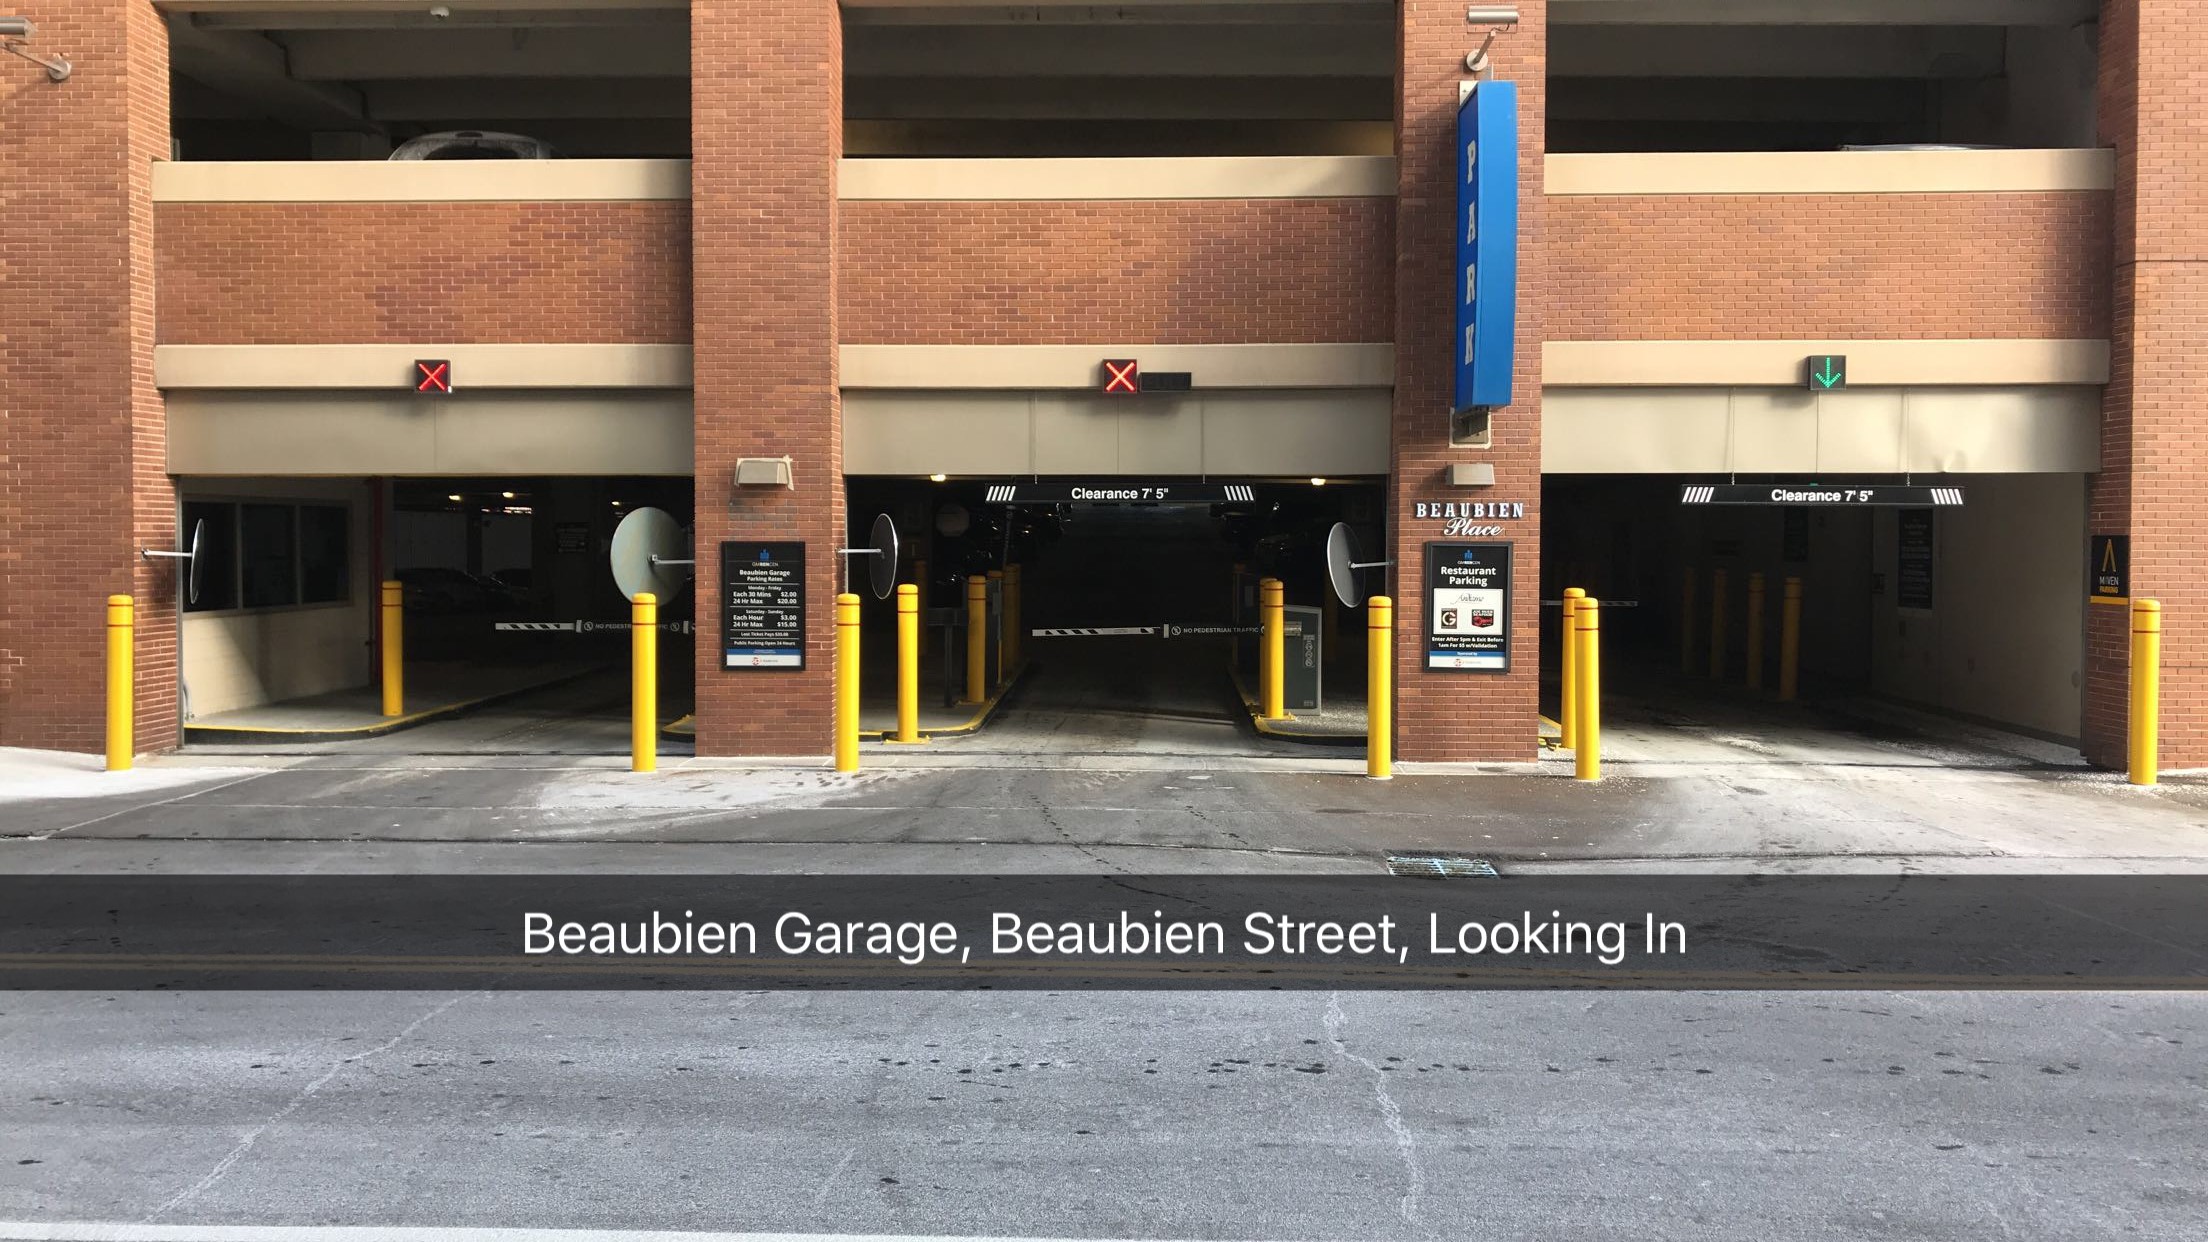 Beaubian Place Garage details